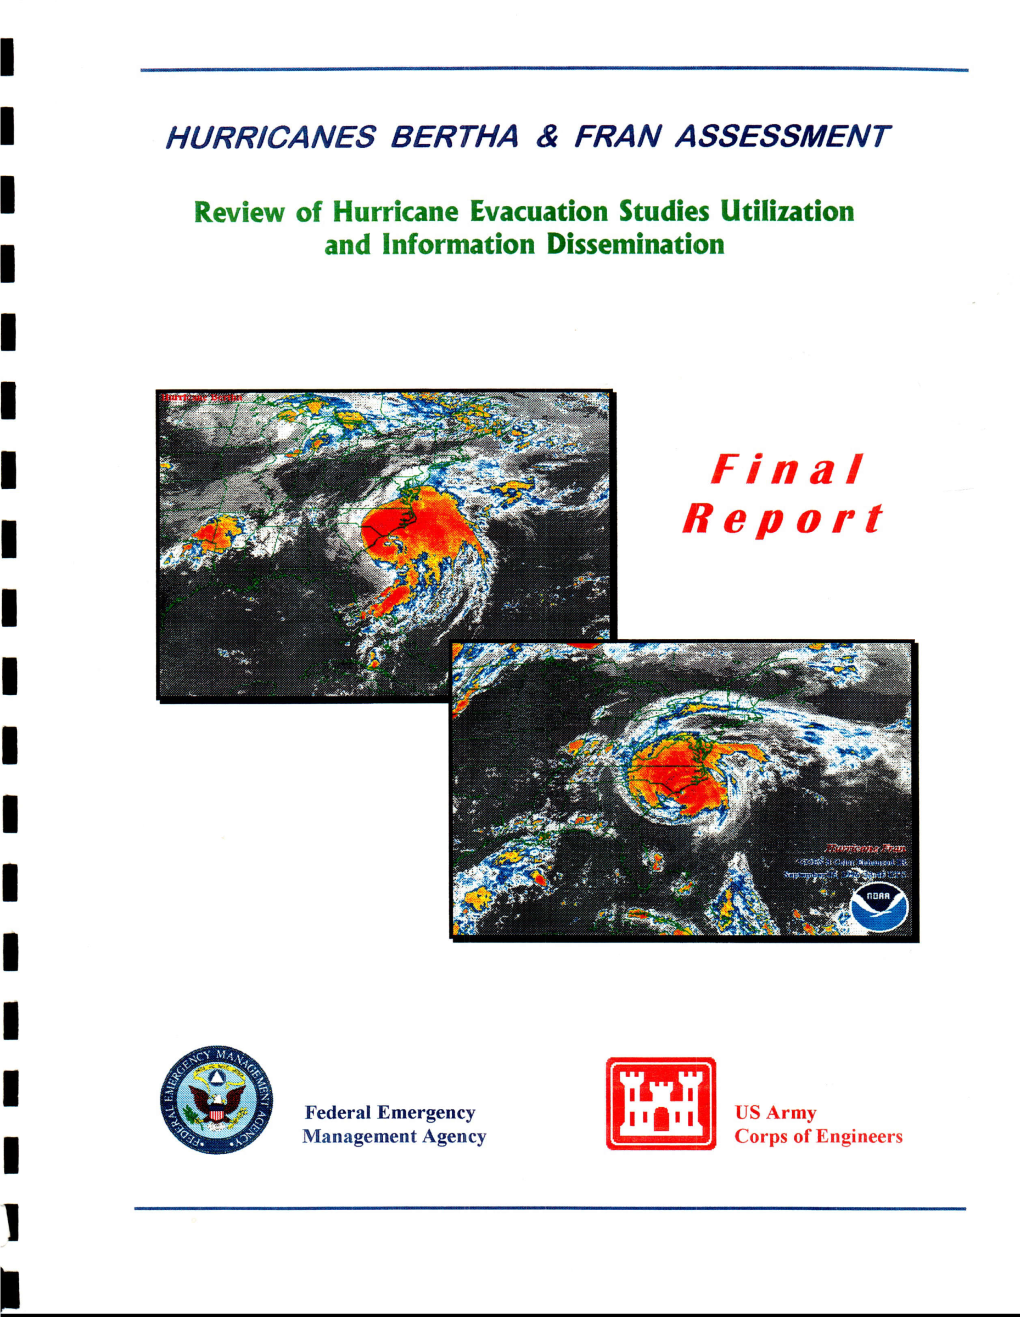 Hurricane Bertha Evacuation, July 9 - 12, 1996 and in the Hurricane Fran Evacuation, September 3 - 6, 1996